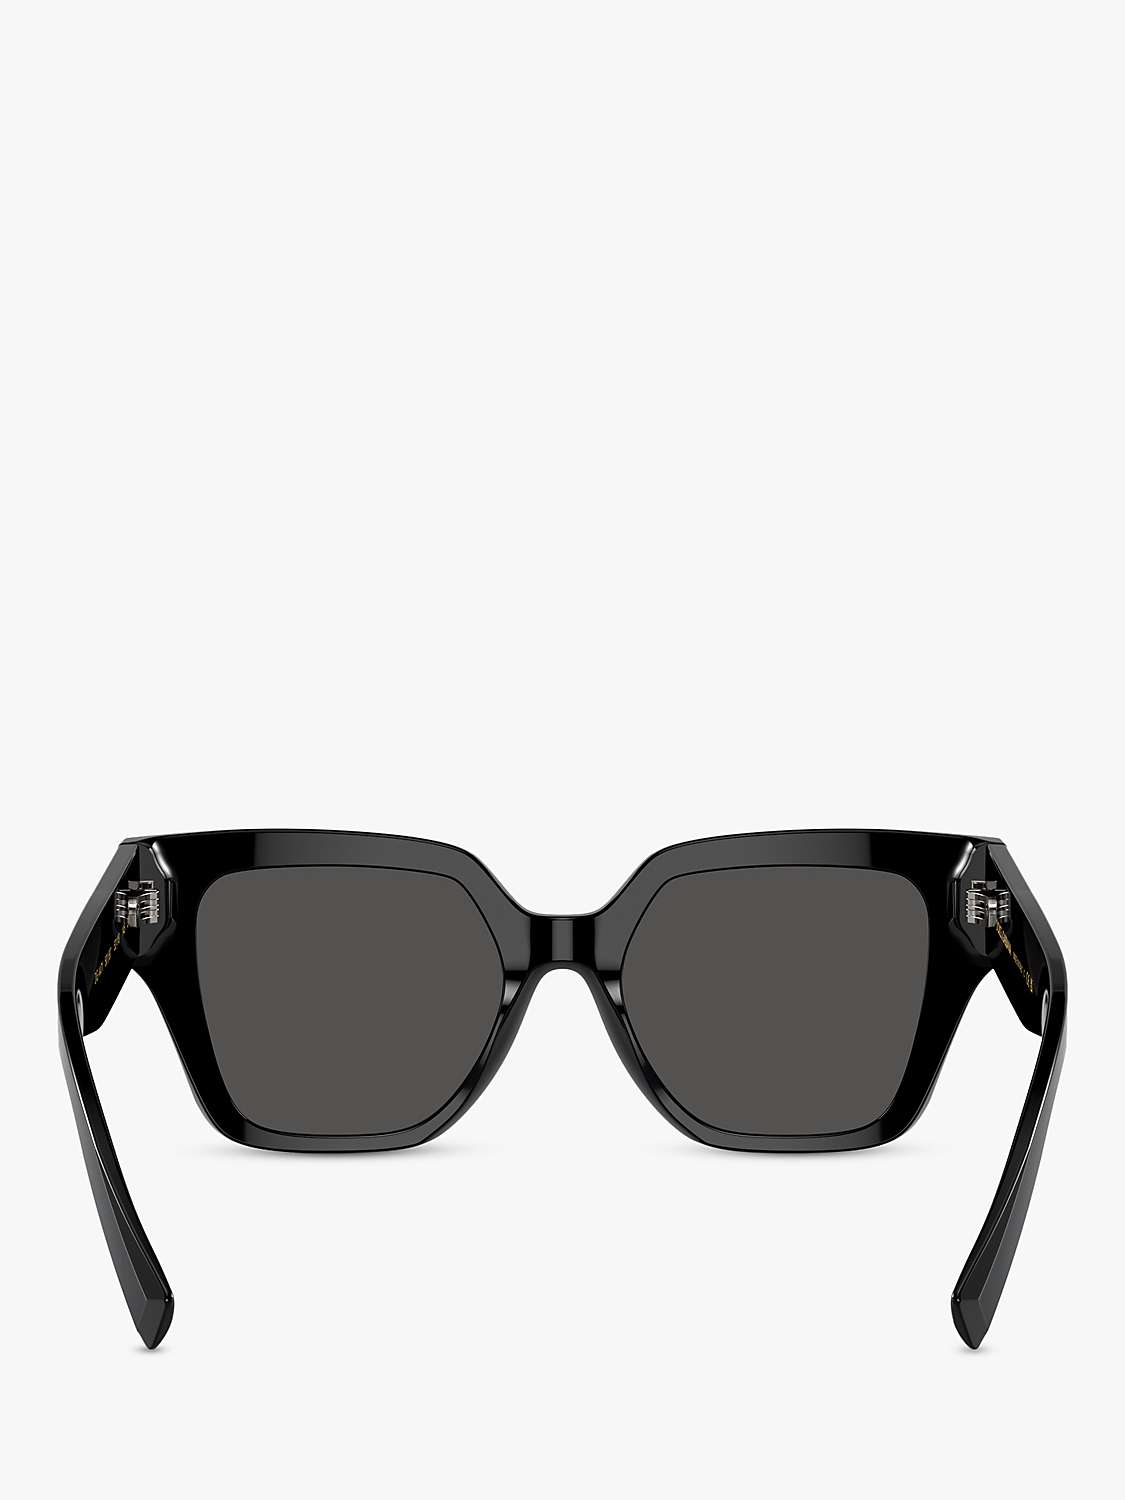 Buy Dolce & Gabbana DG4471 Women's Rectangular Sunglasses, Black Online at johnlewis.com